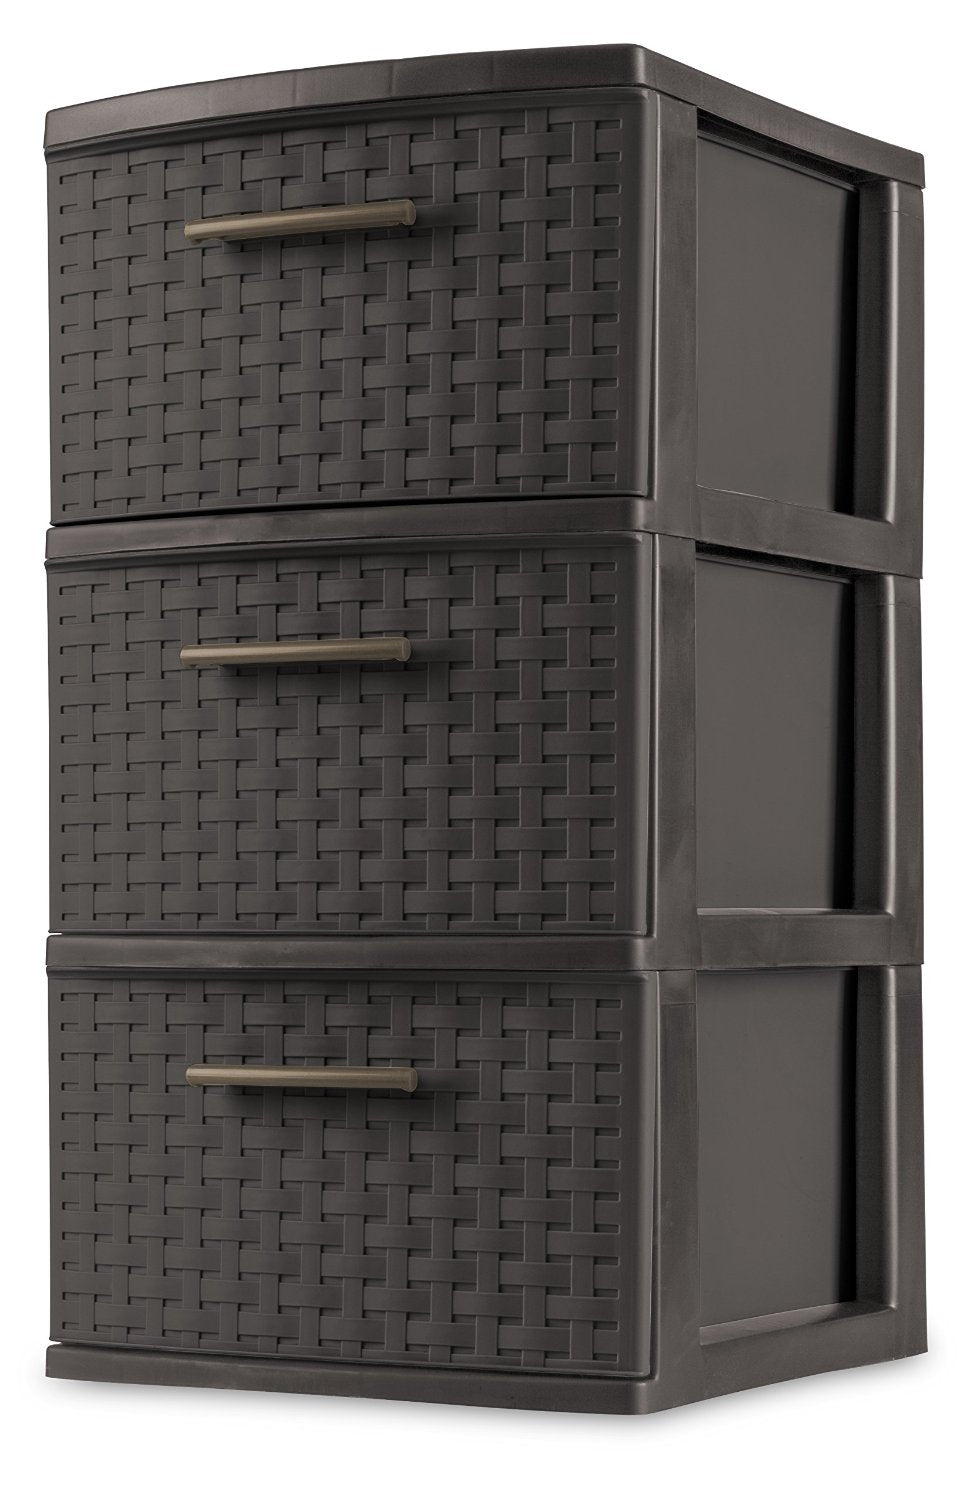 Sterilite 26306P02 Decorative 3-Drawer Storage Weave Tower, Espresso